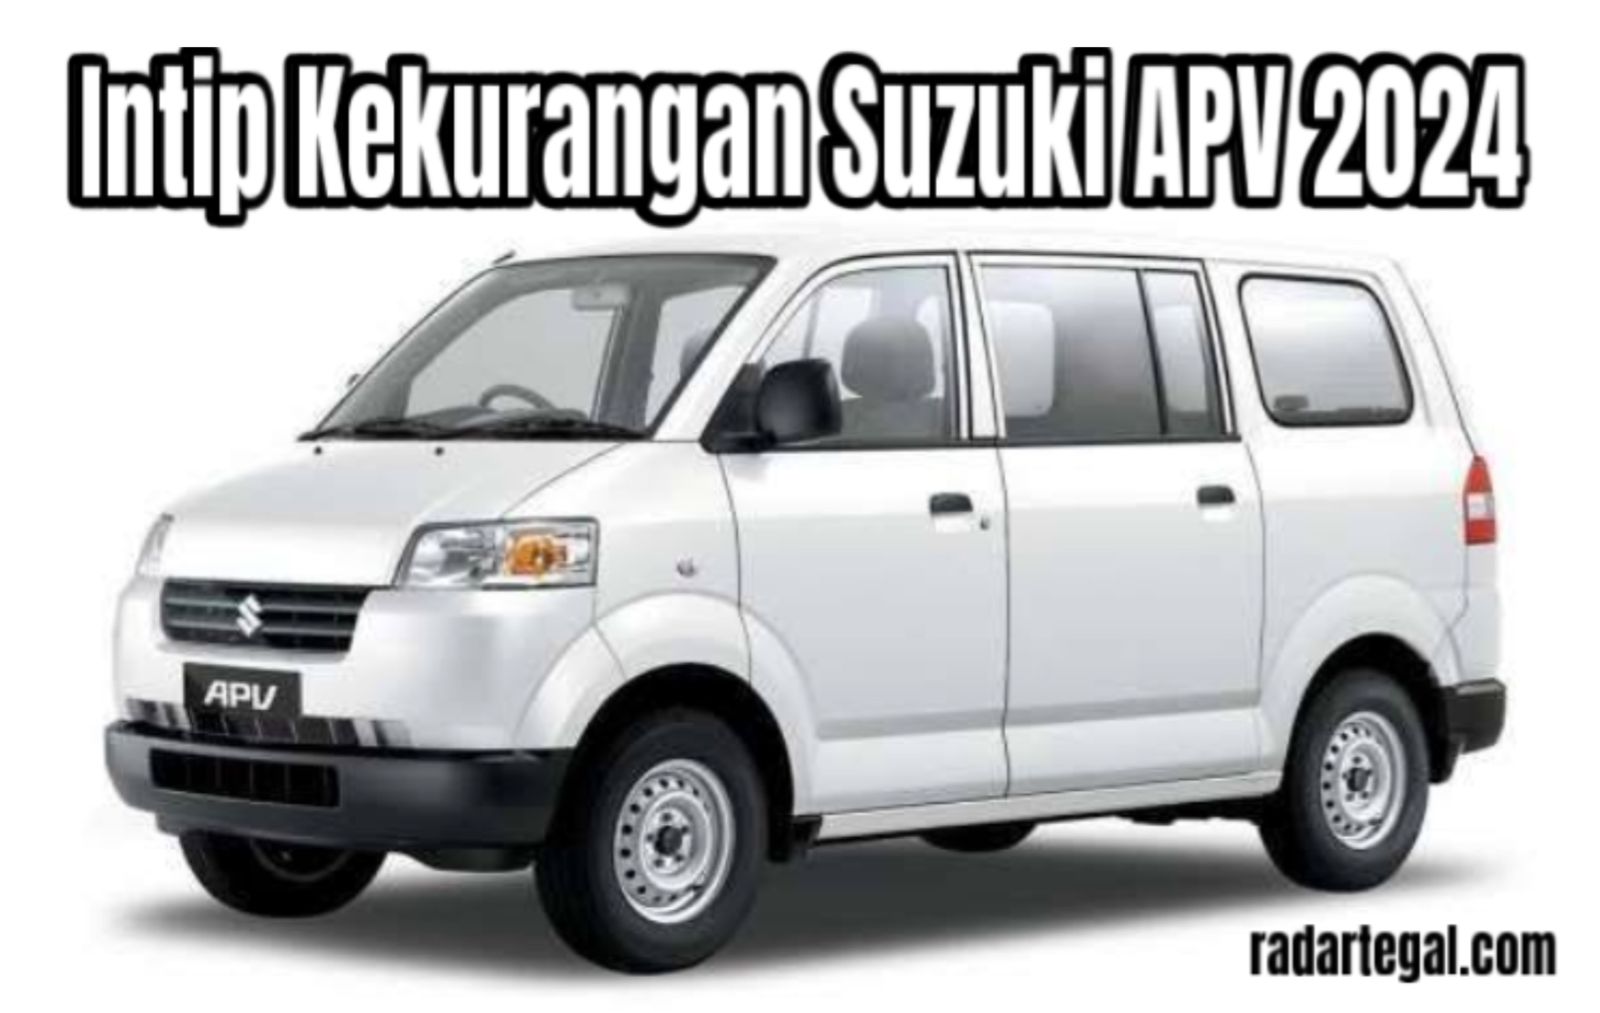 Minim Fitur Keselamatan, Ini 5 Kekurangan Suzuki APV 2024 yang Perlu Jadi Pertimbangan